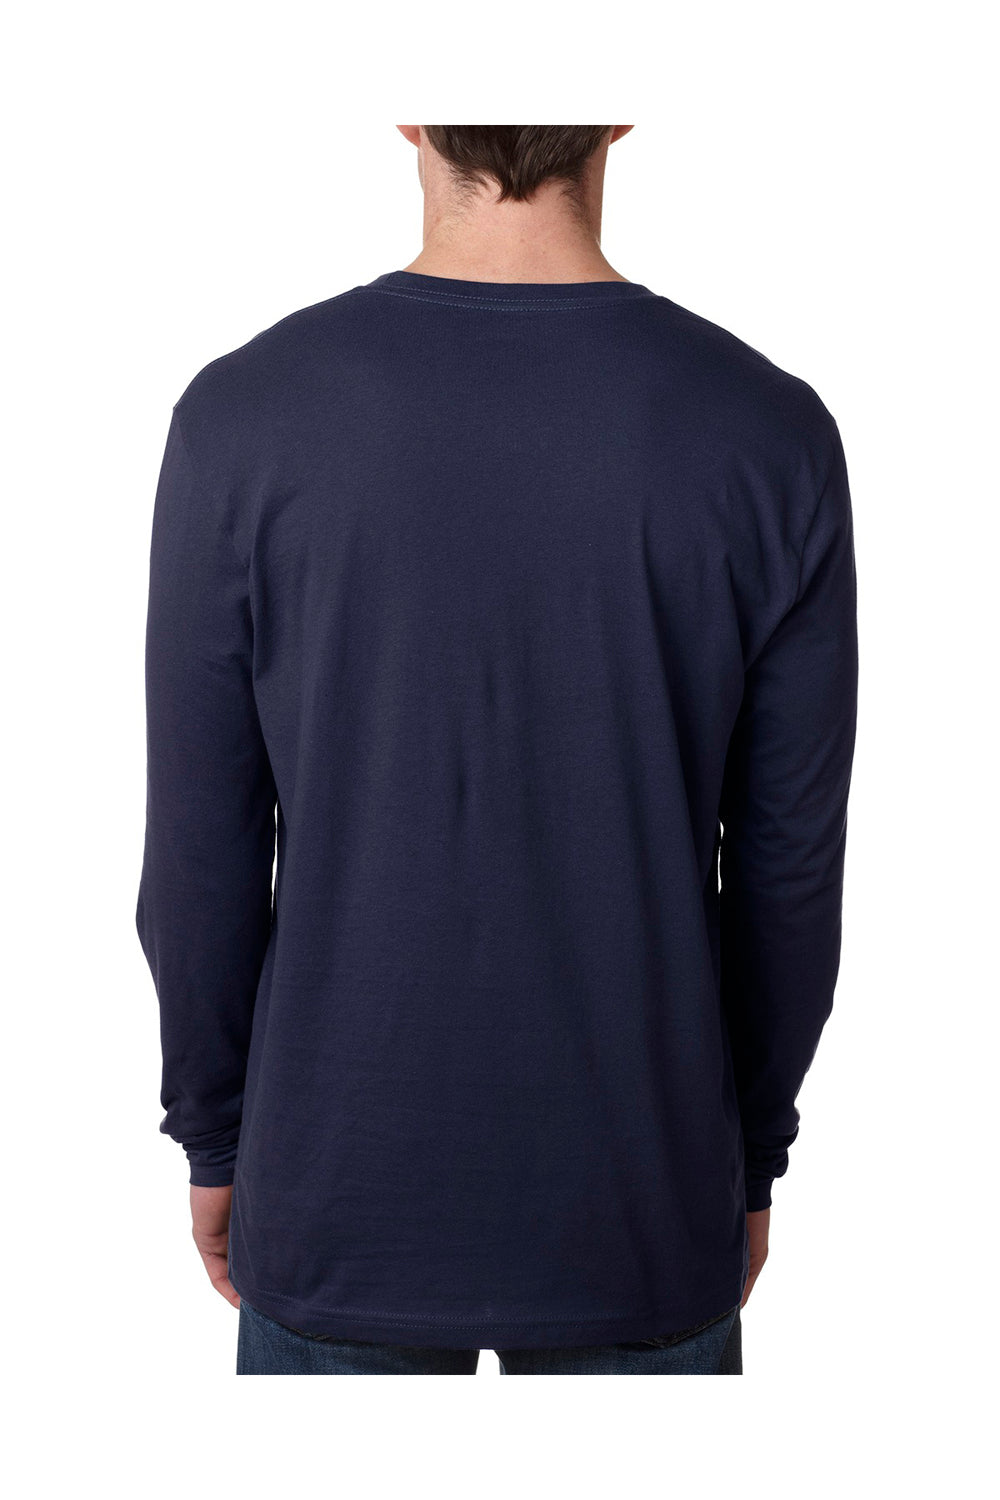 Next Level N3601 Mens Fine Jersey Long Sleeve Crewneck T-Shirt Navy Blue Back